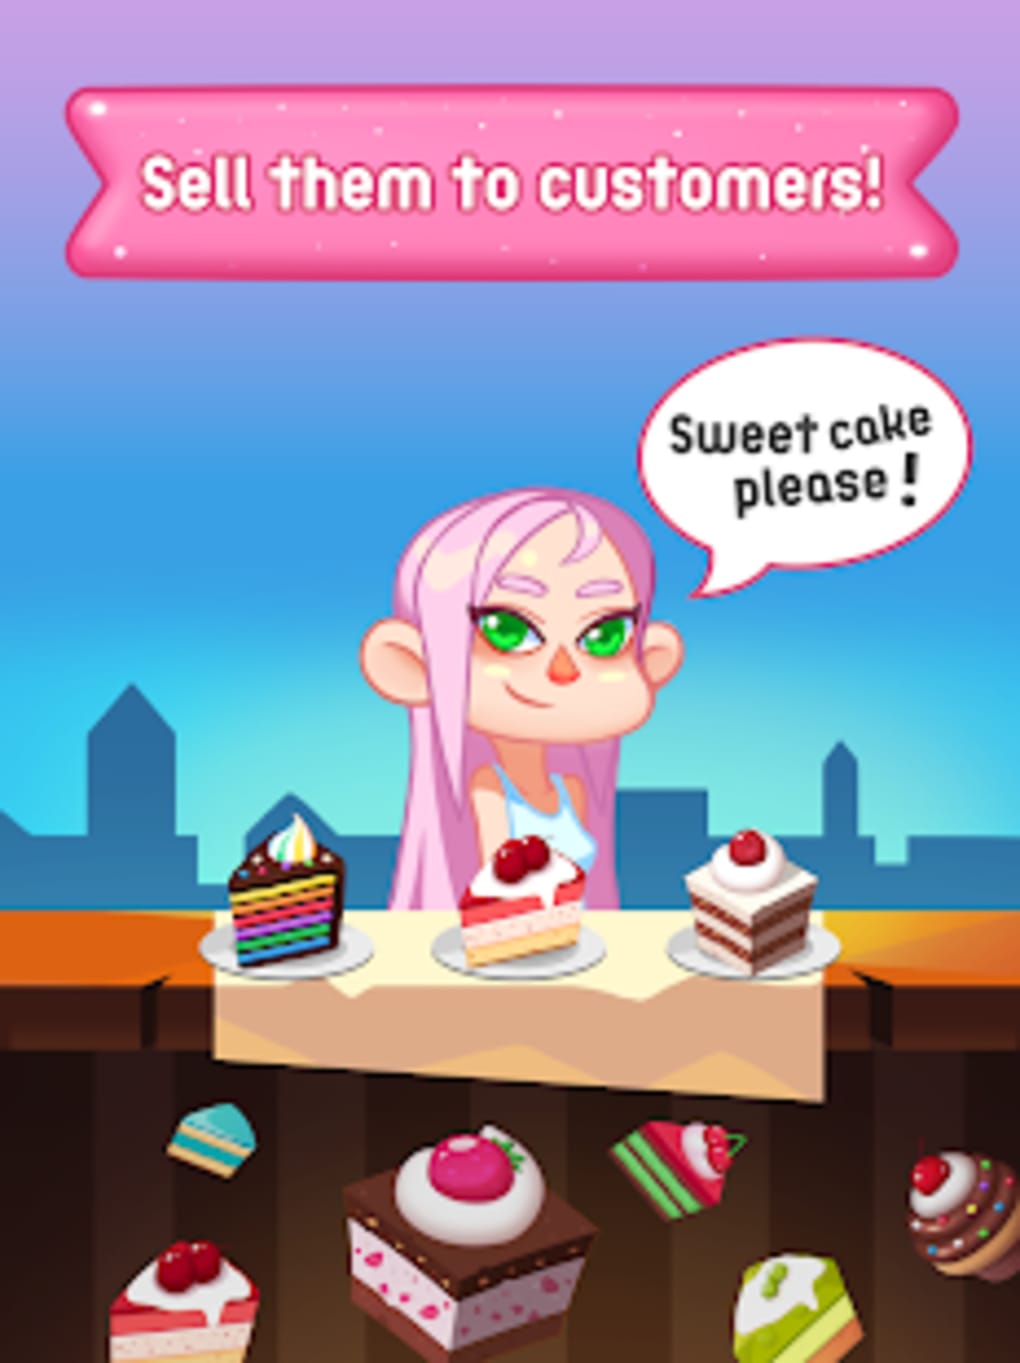 Merge Cakes Poki APK (Android Game) - Baixar Grátis